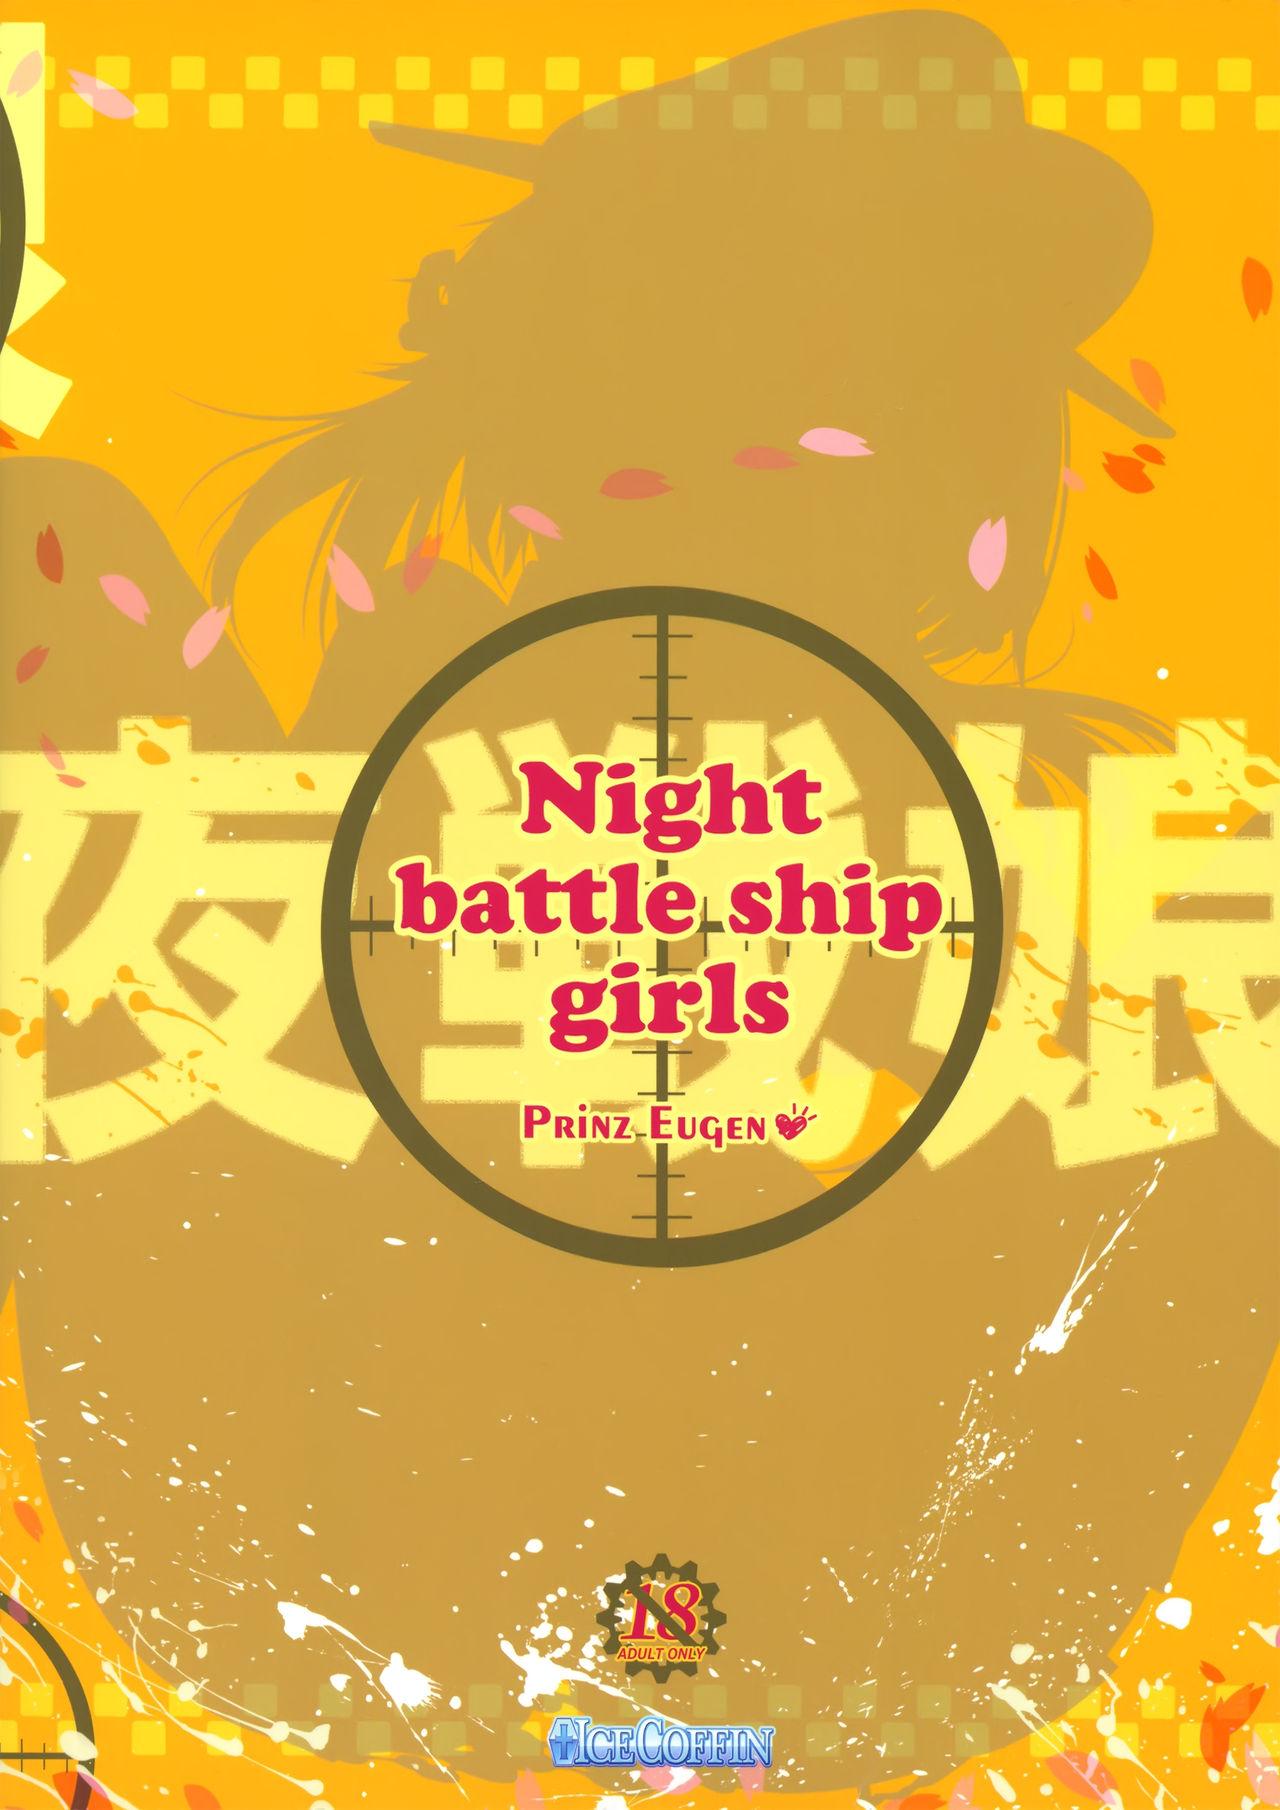 Night battle ship girls 25